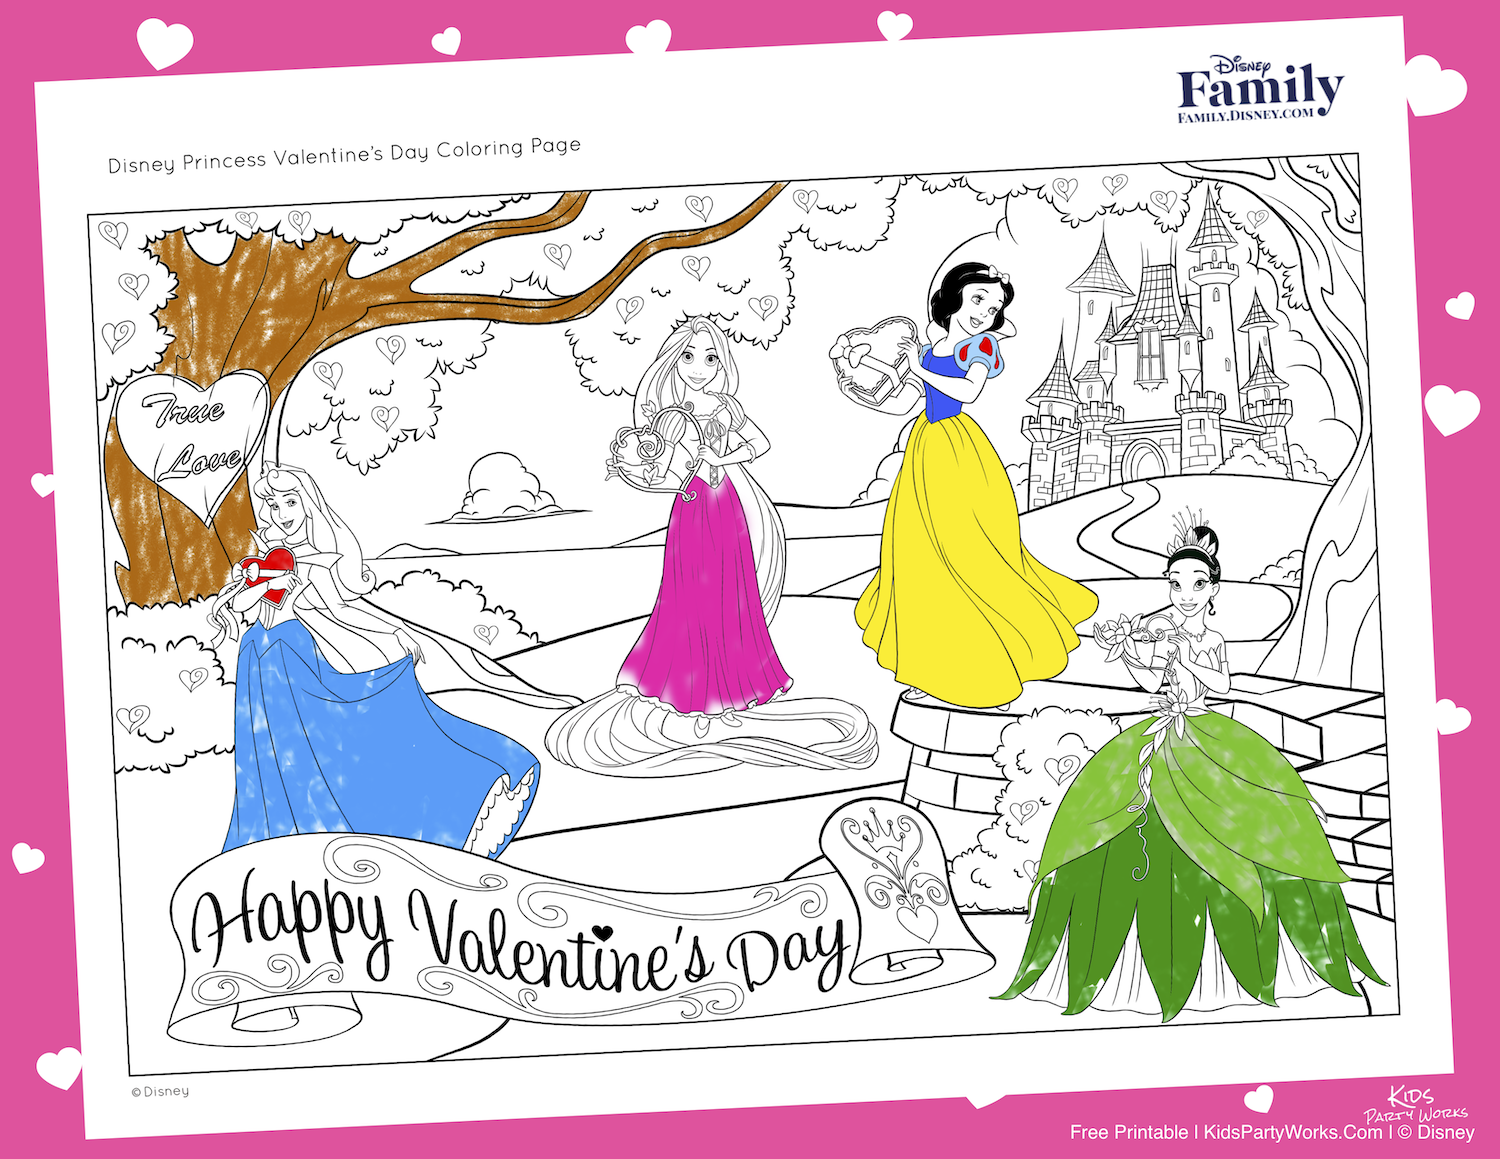 Disney Princess Valentines Coloring Page. Visit KidsPartyWorks.Com for lots of kids free printables.